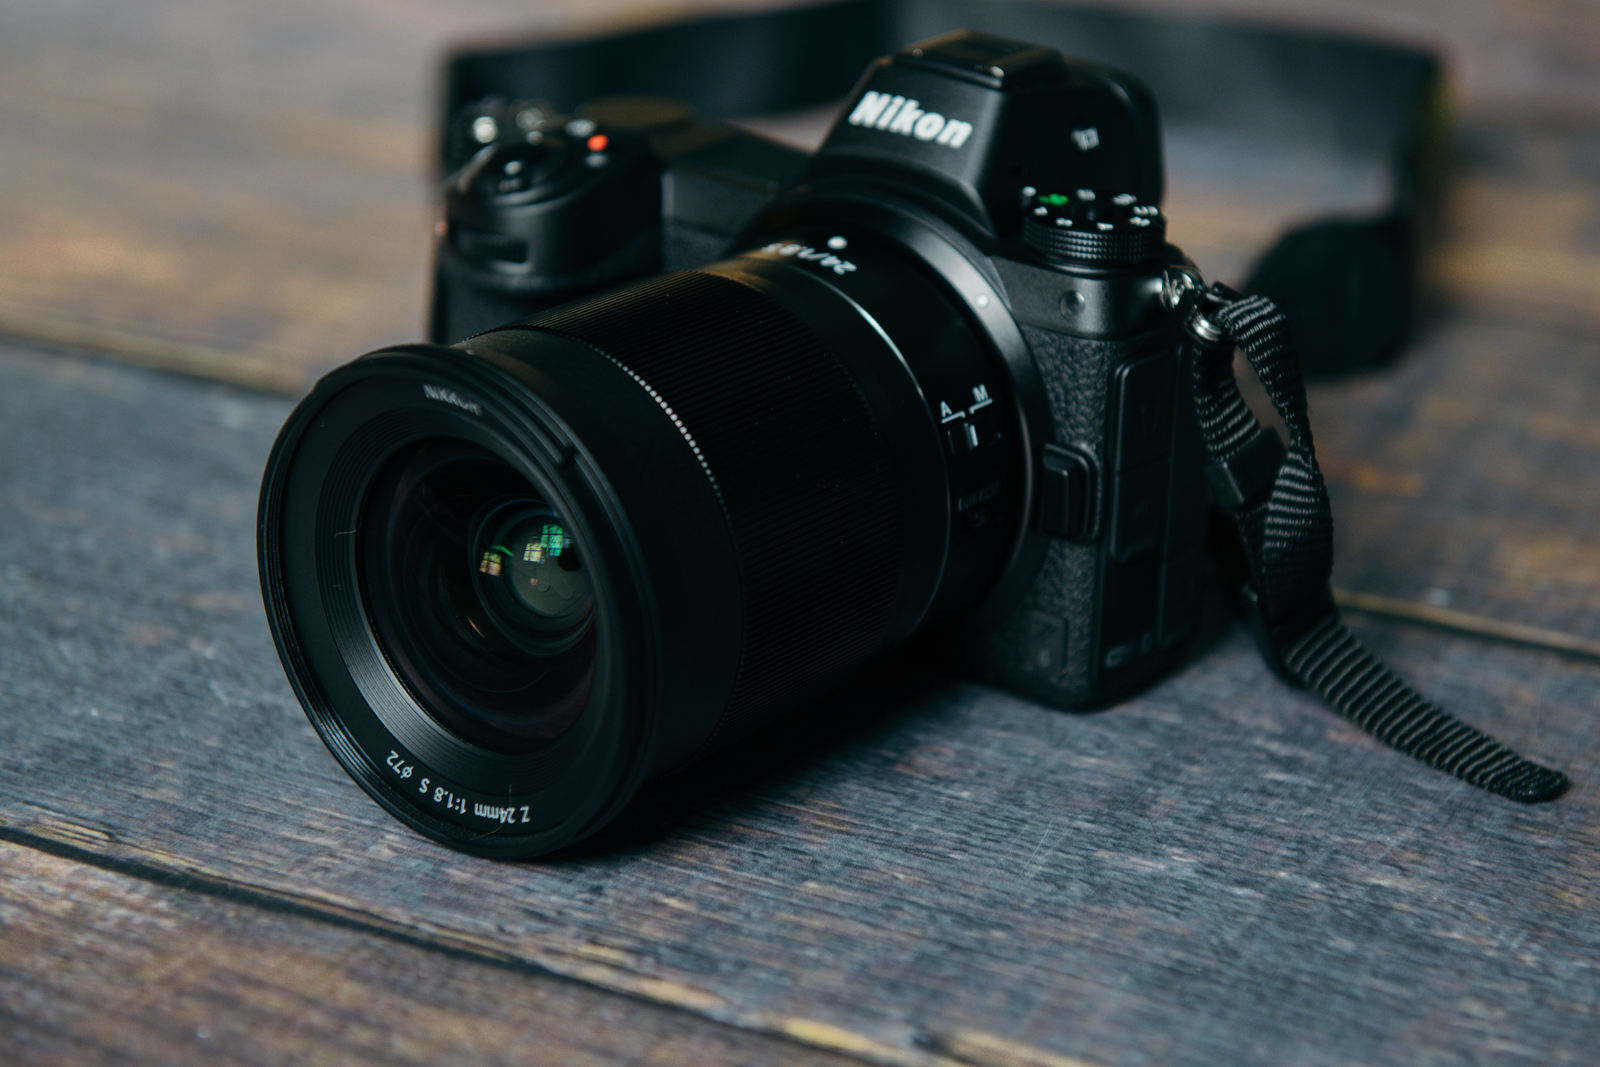 Nikon Z 24mm f/1.8 lens mounted to Z 6 camera